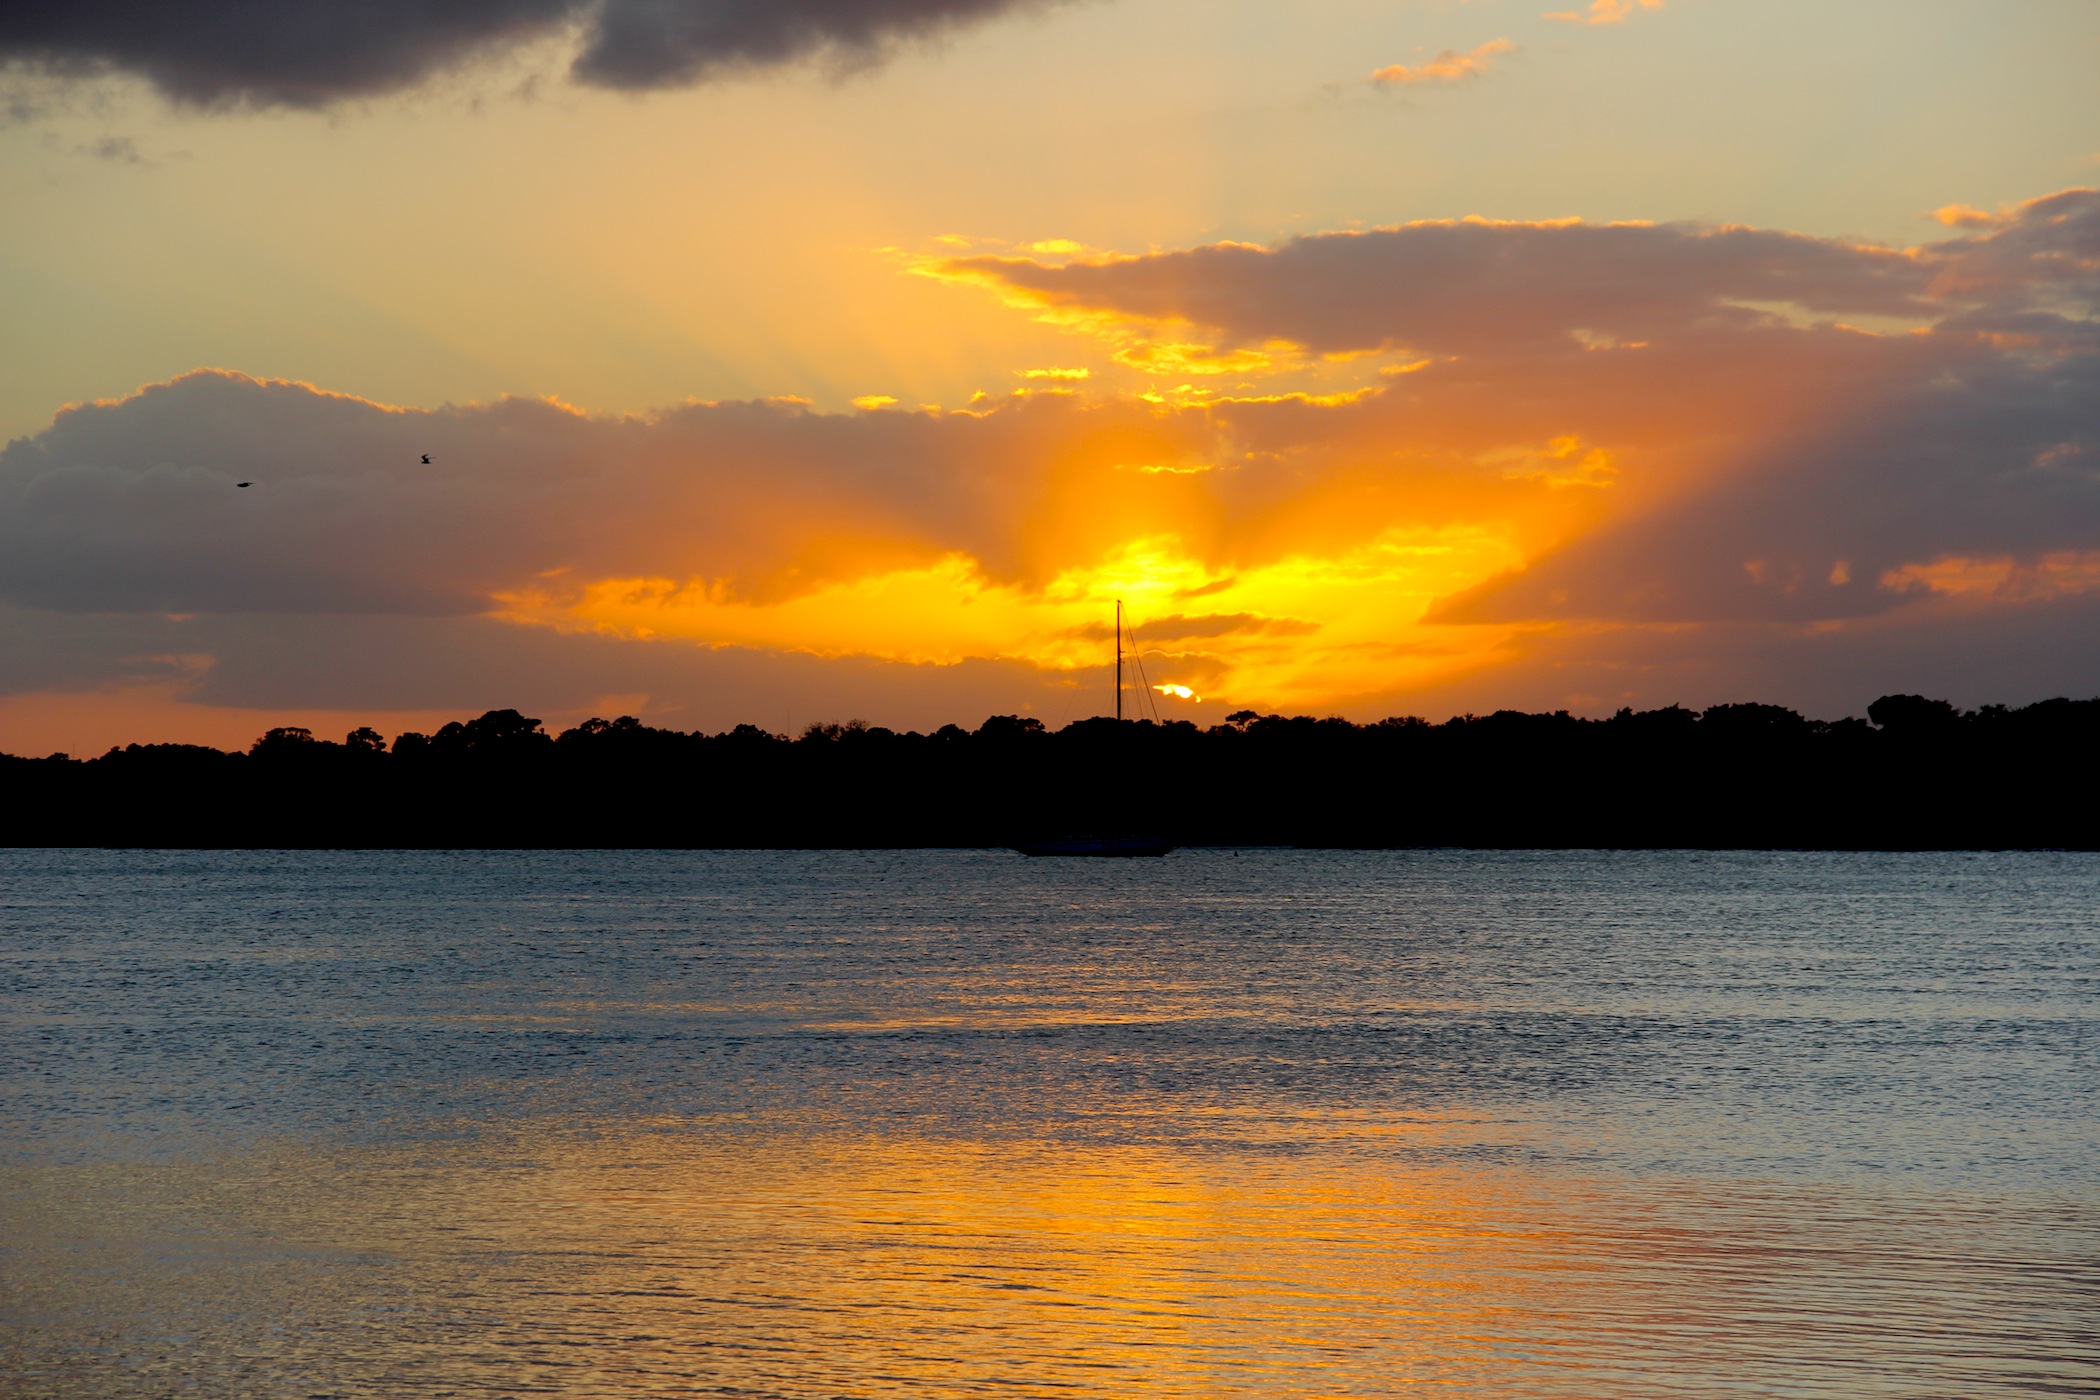 Sunset of Vilano Beach, Florida